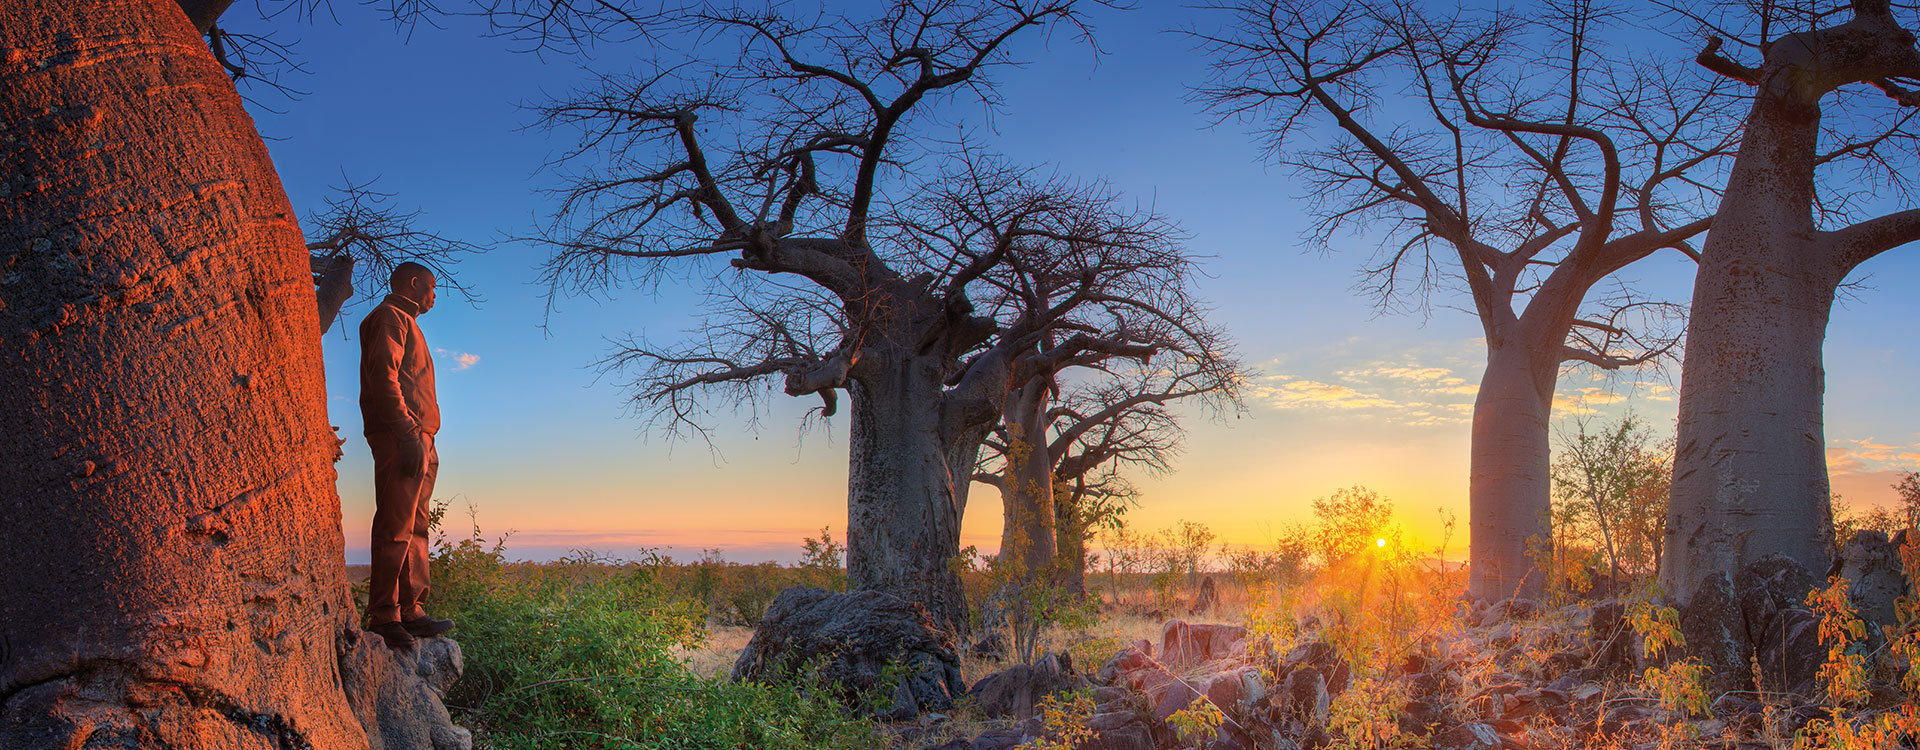 Chobe National Park_Sunset